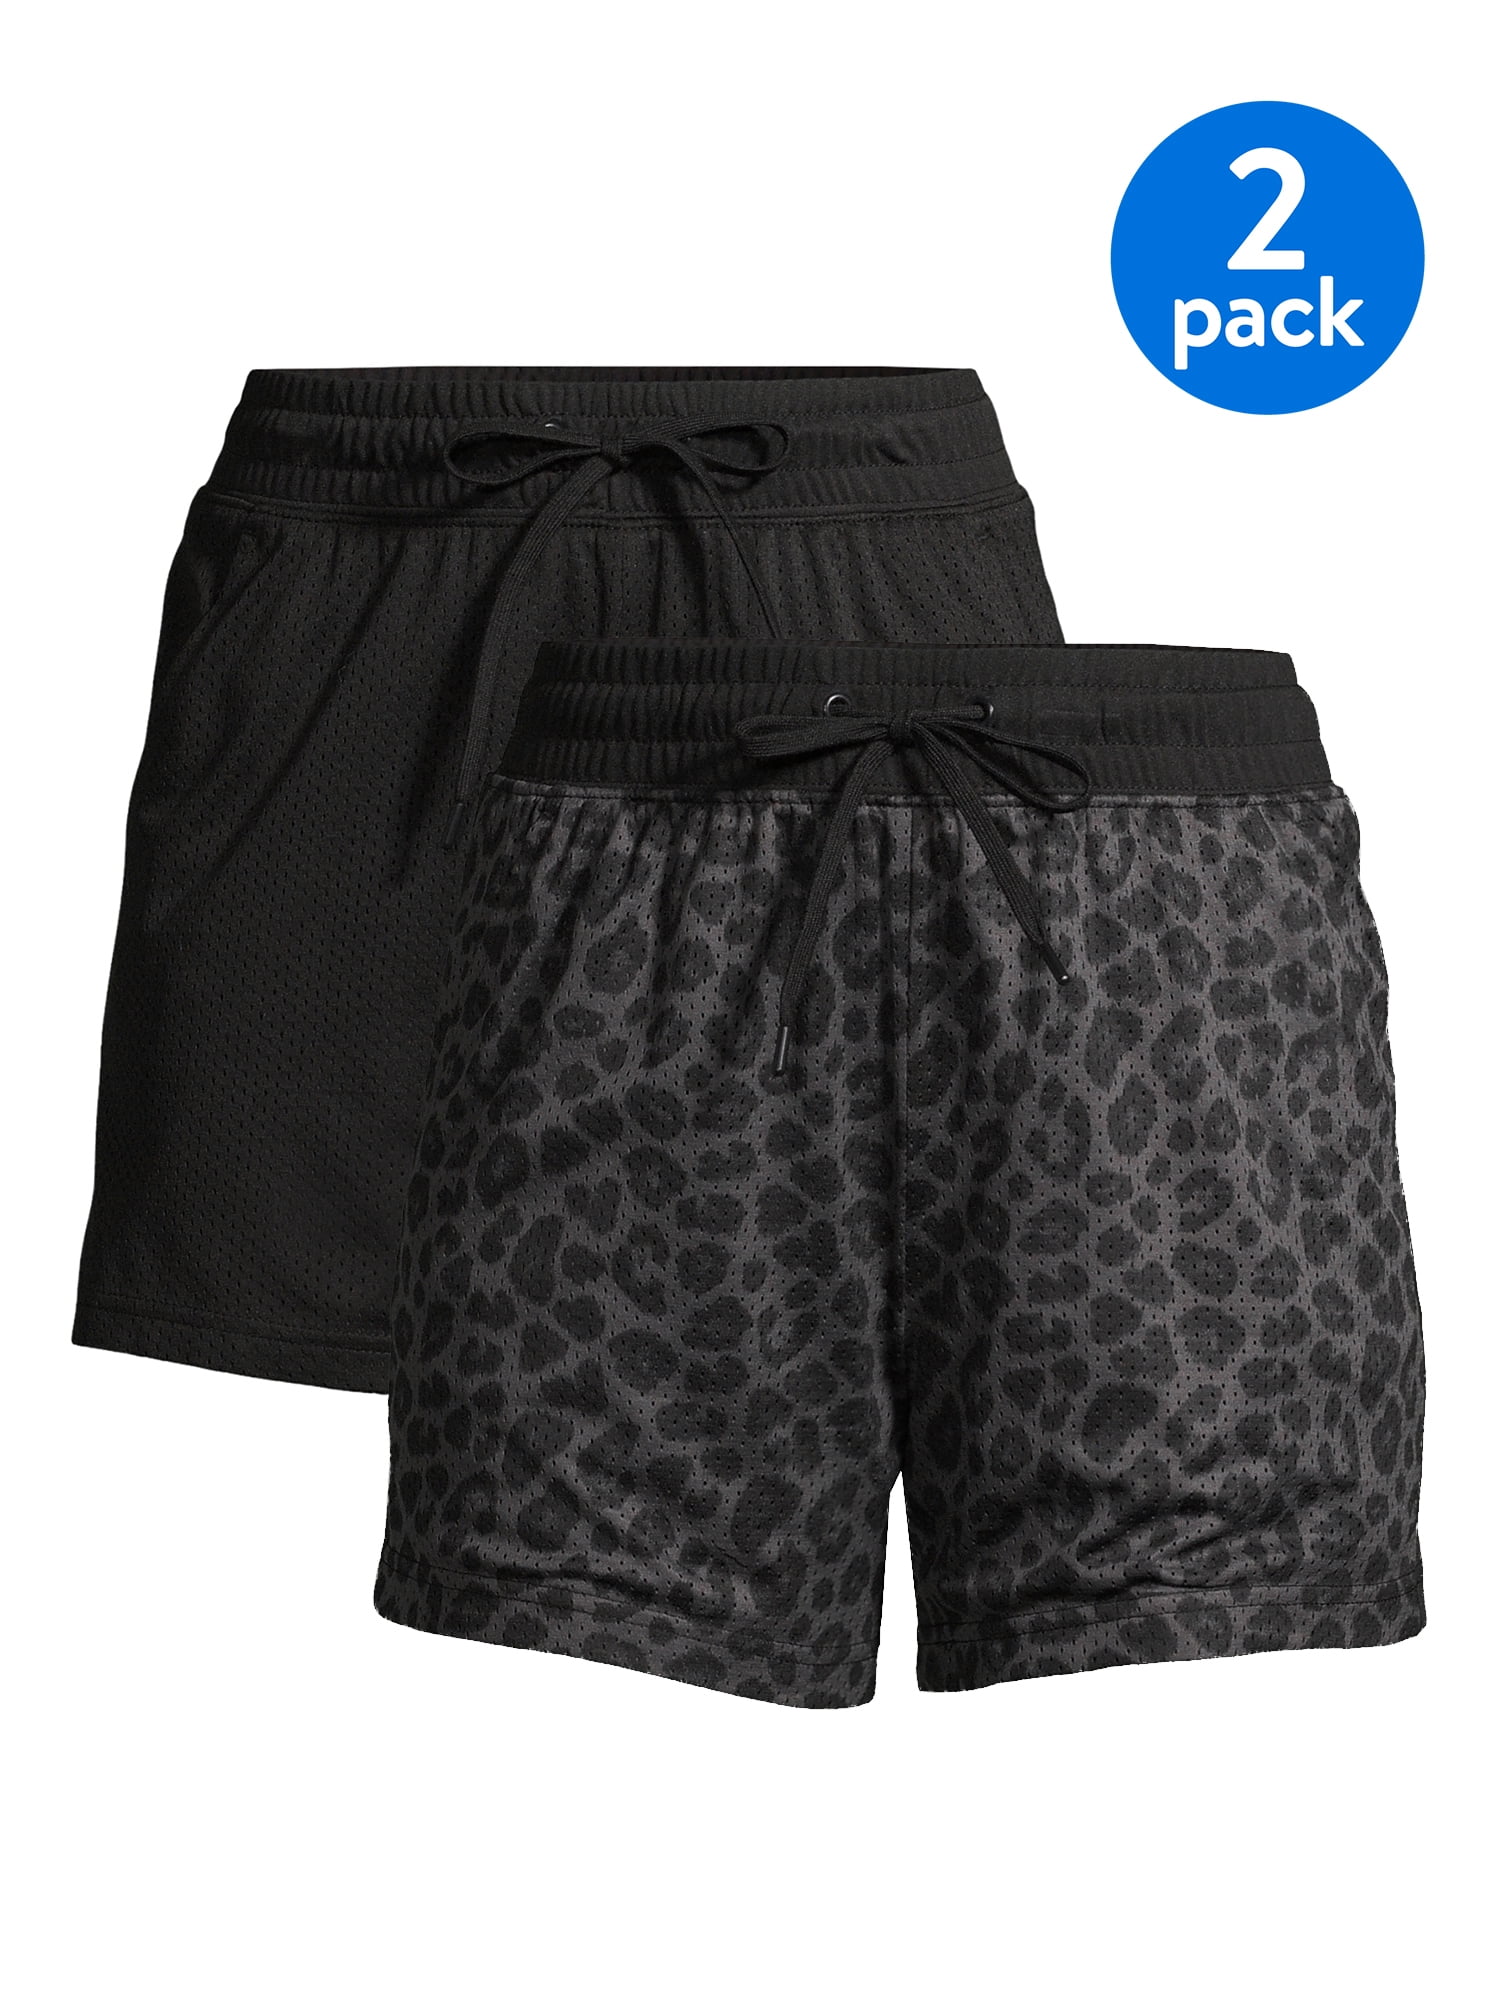 Athletic Works Women's Mesh Shorts, 2-Pack - Walmart.com